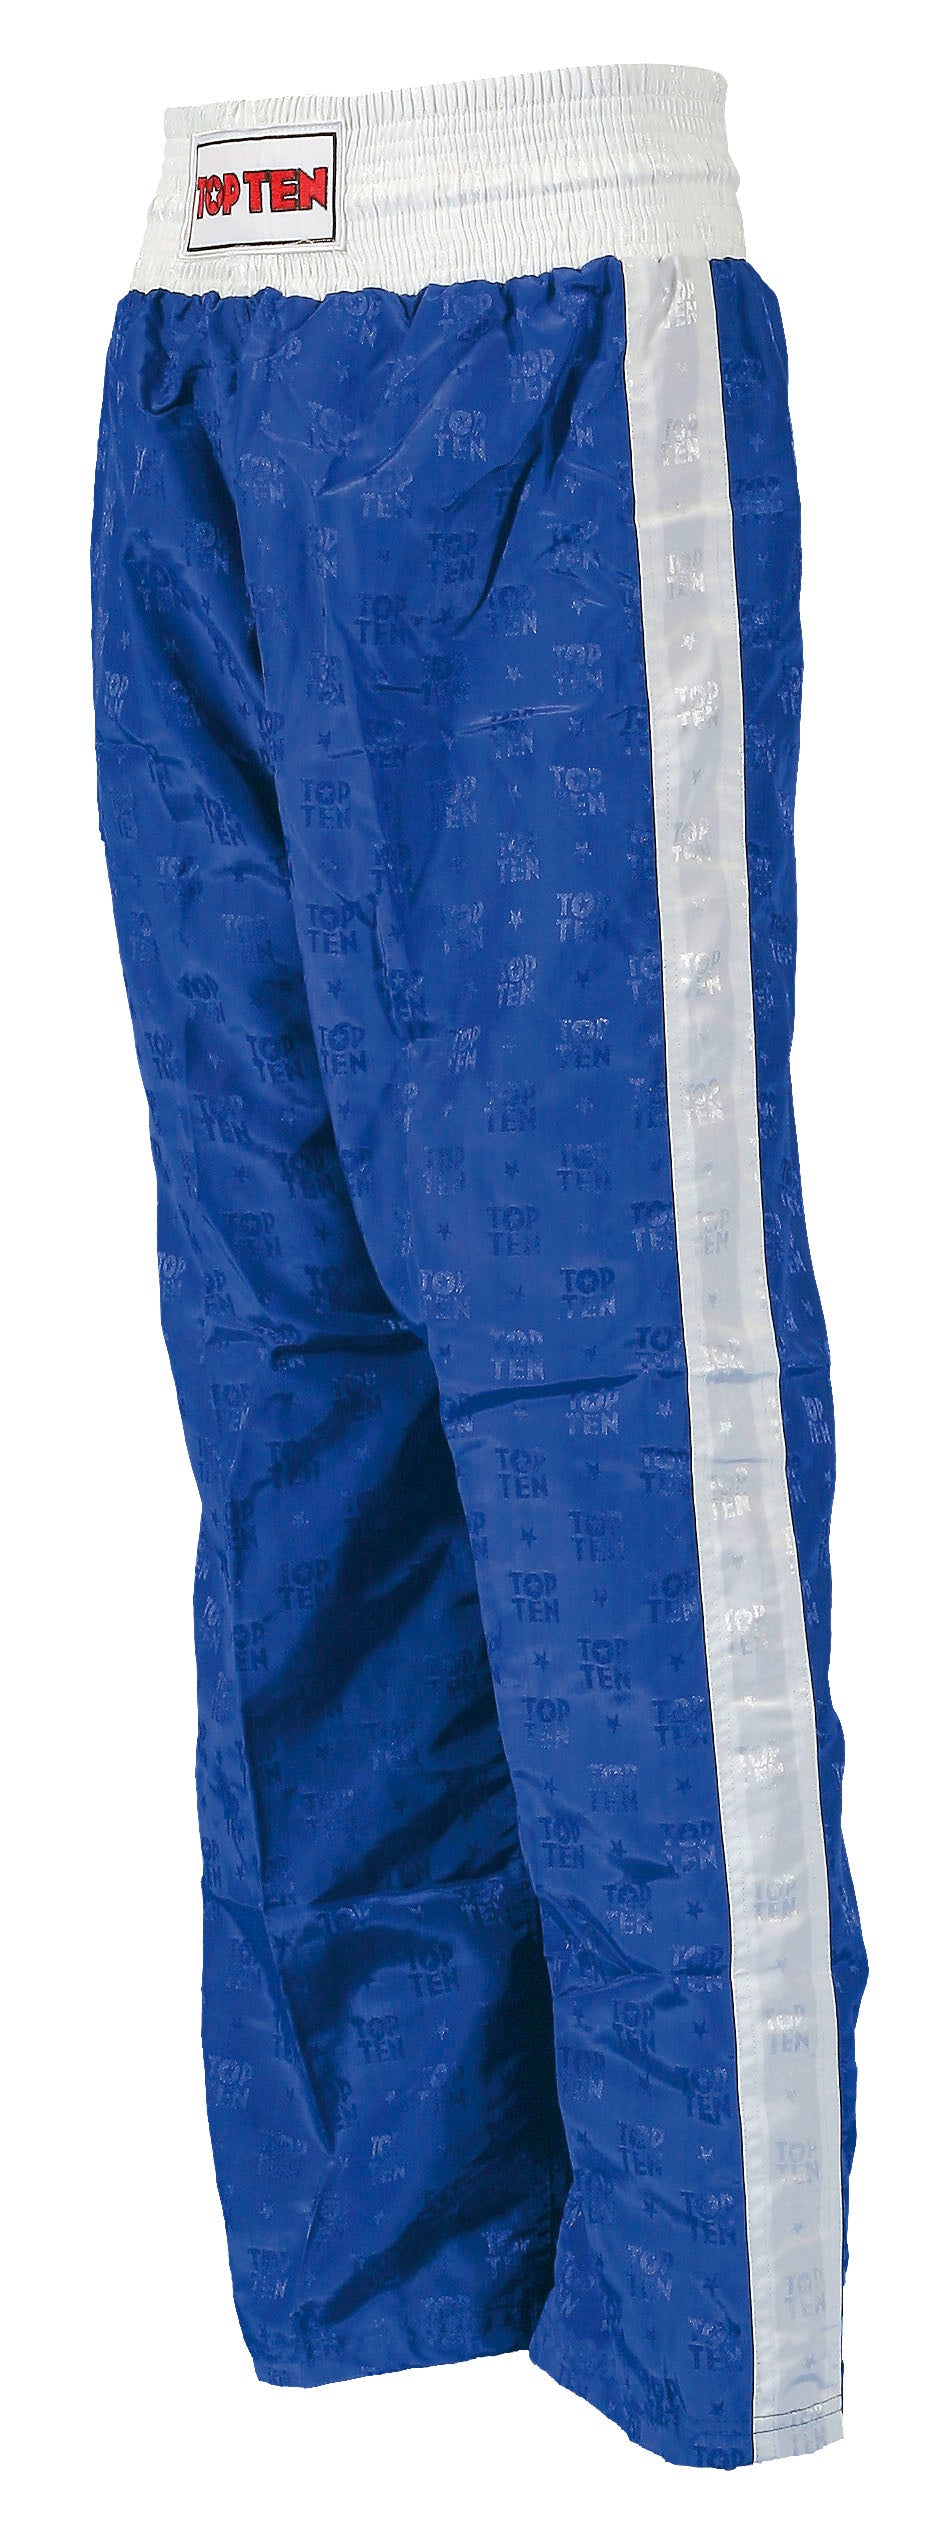 Top Ten Kickboxing Pants Blue with White Stripe